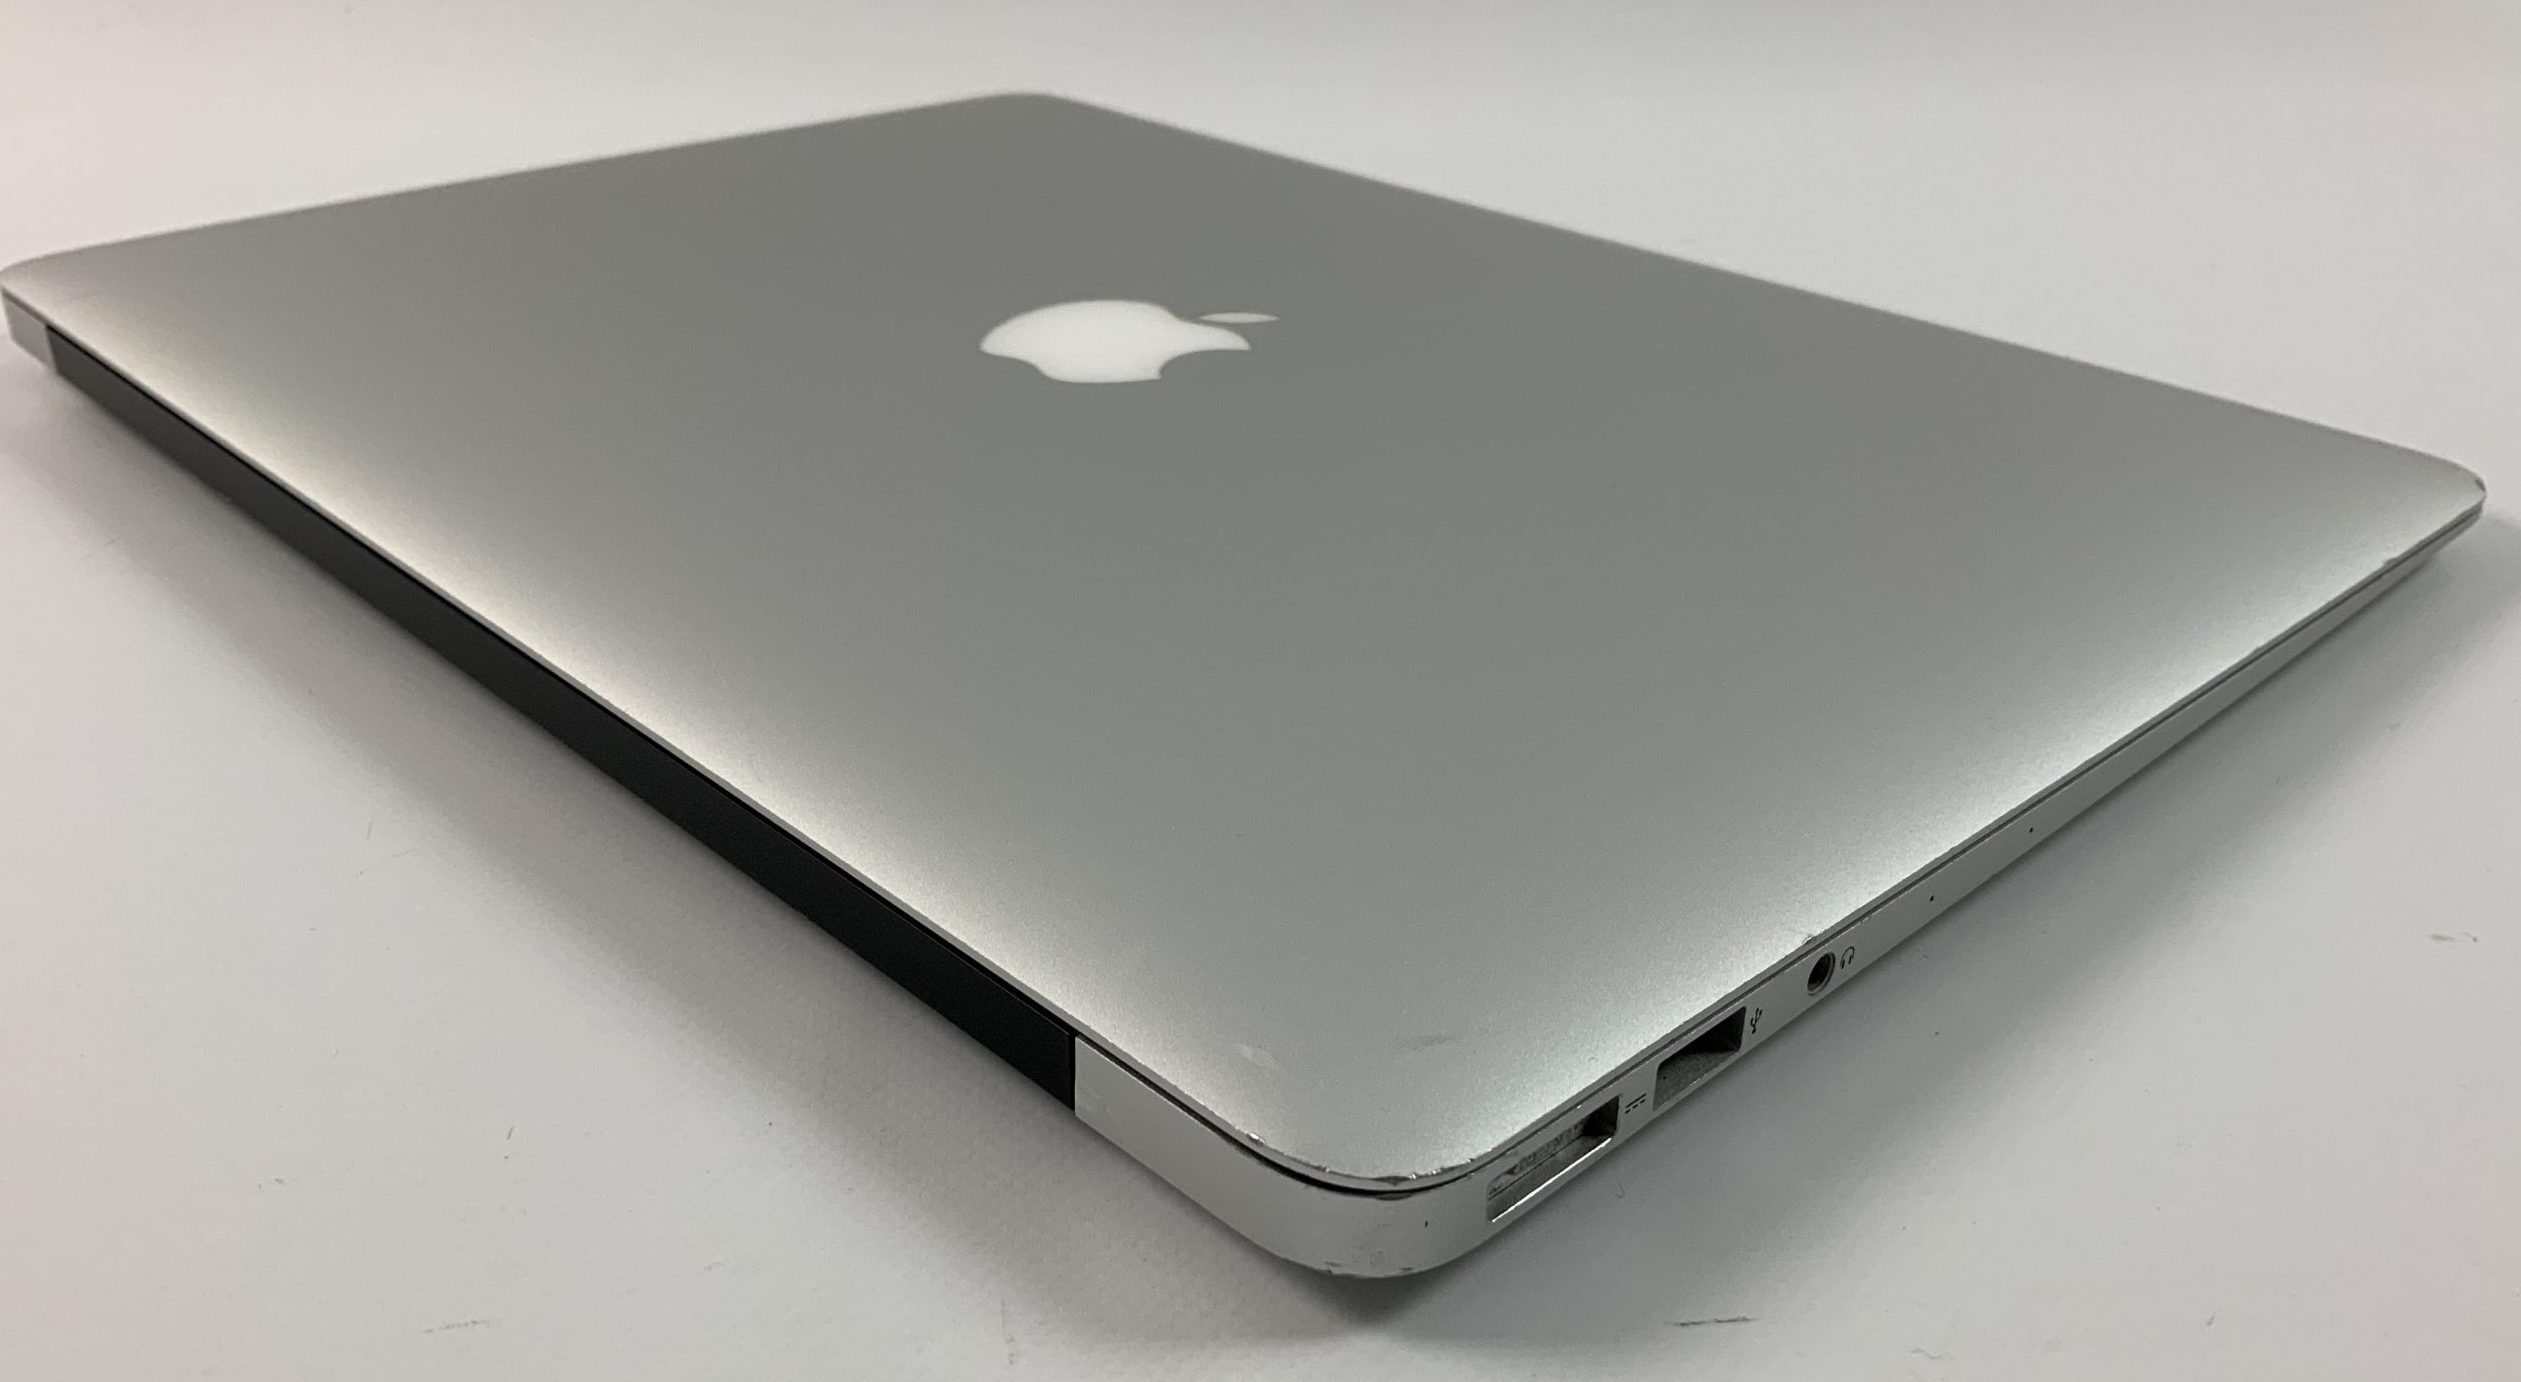 MacBook Air 13" Early 2015 (Intel Core i5 1.6 GHz 8 GB RAM 128 GB SSD), Intel Core i5 1.6 GHz, 8 GB RAM, 128 GB SSD, bild 4